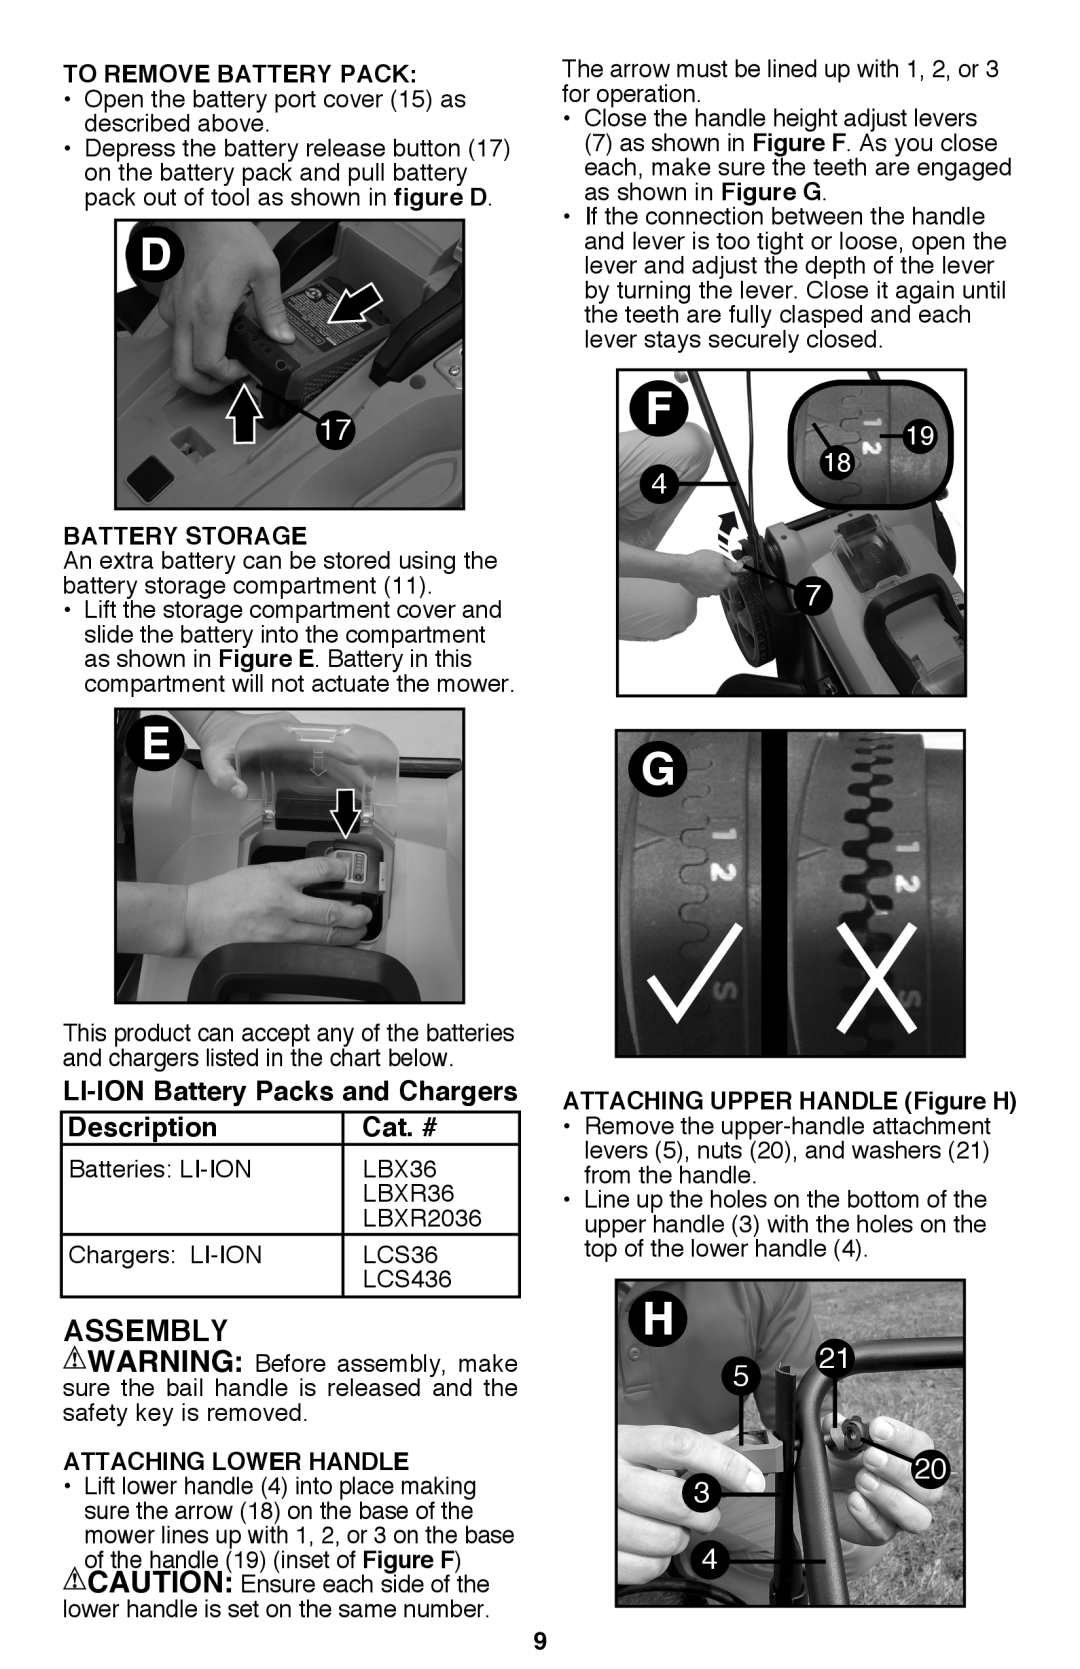 Black & Decker CM2040 instruction manual Assembly, LI-ION Battery Packs and Chargers, Description, Cat. # 